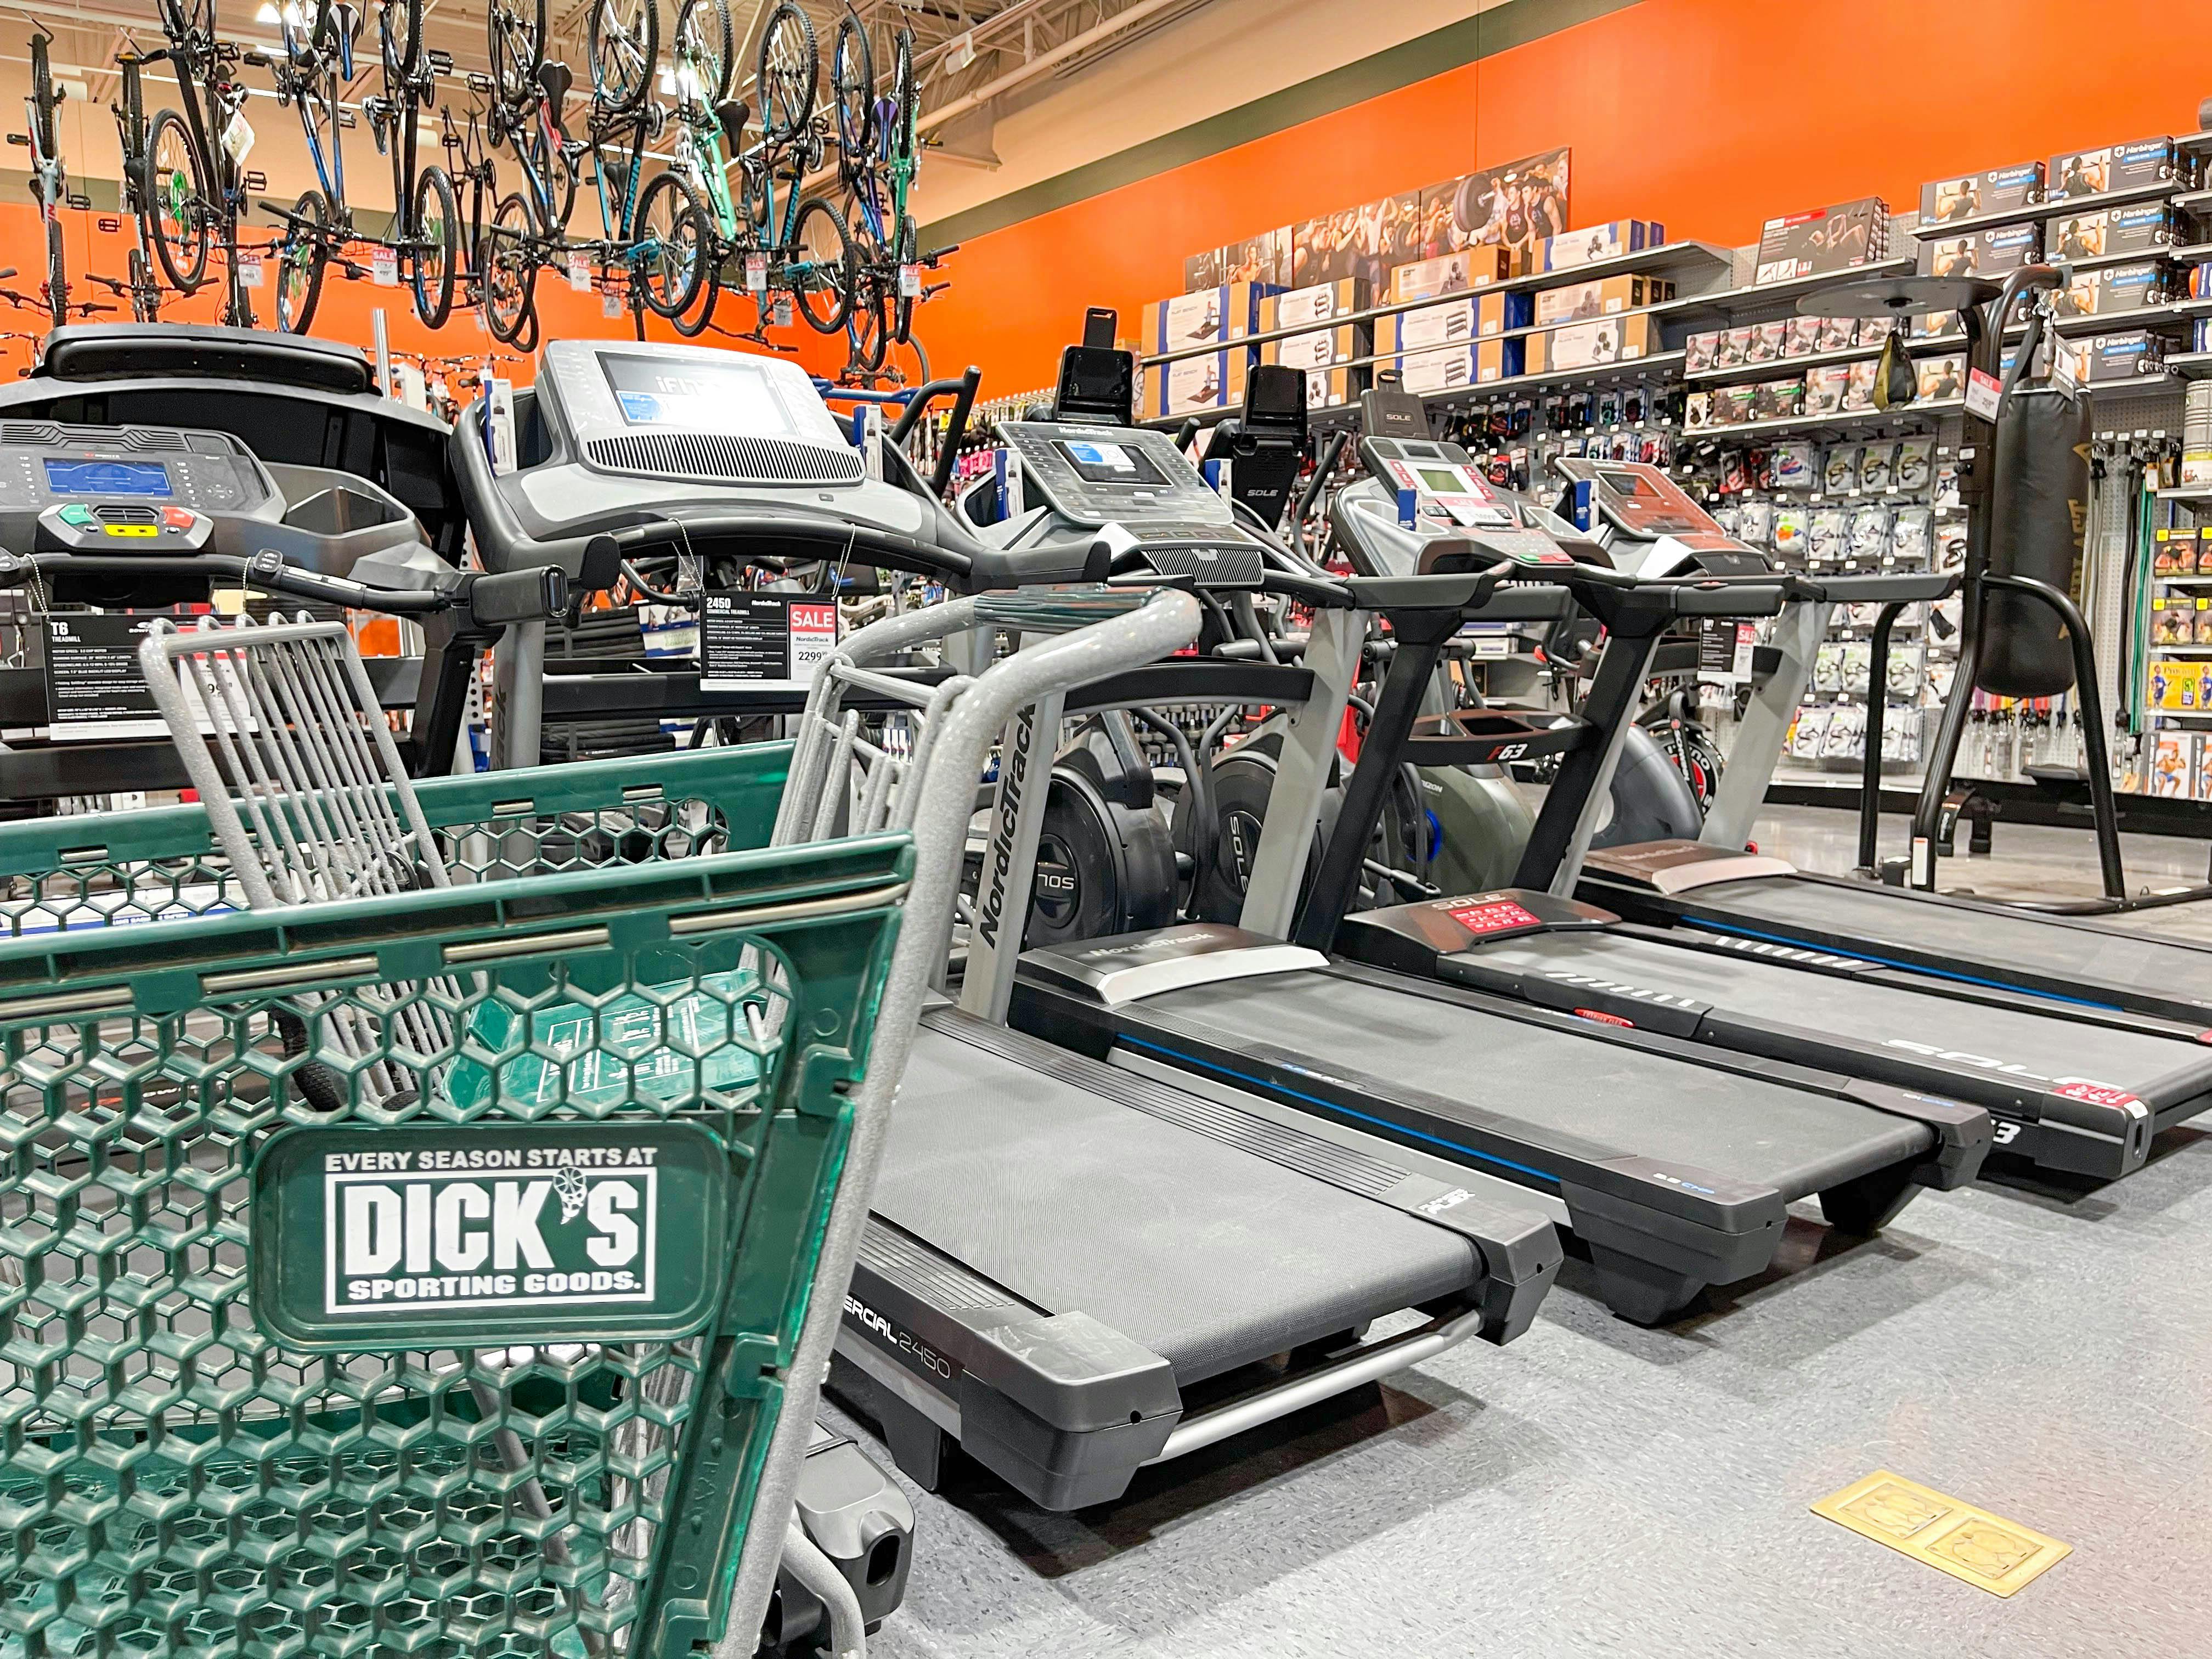 dicks cart in front of treadmills